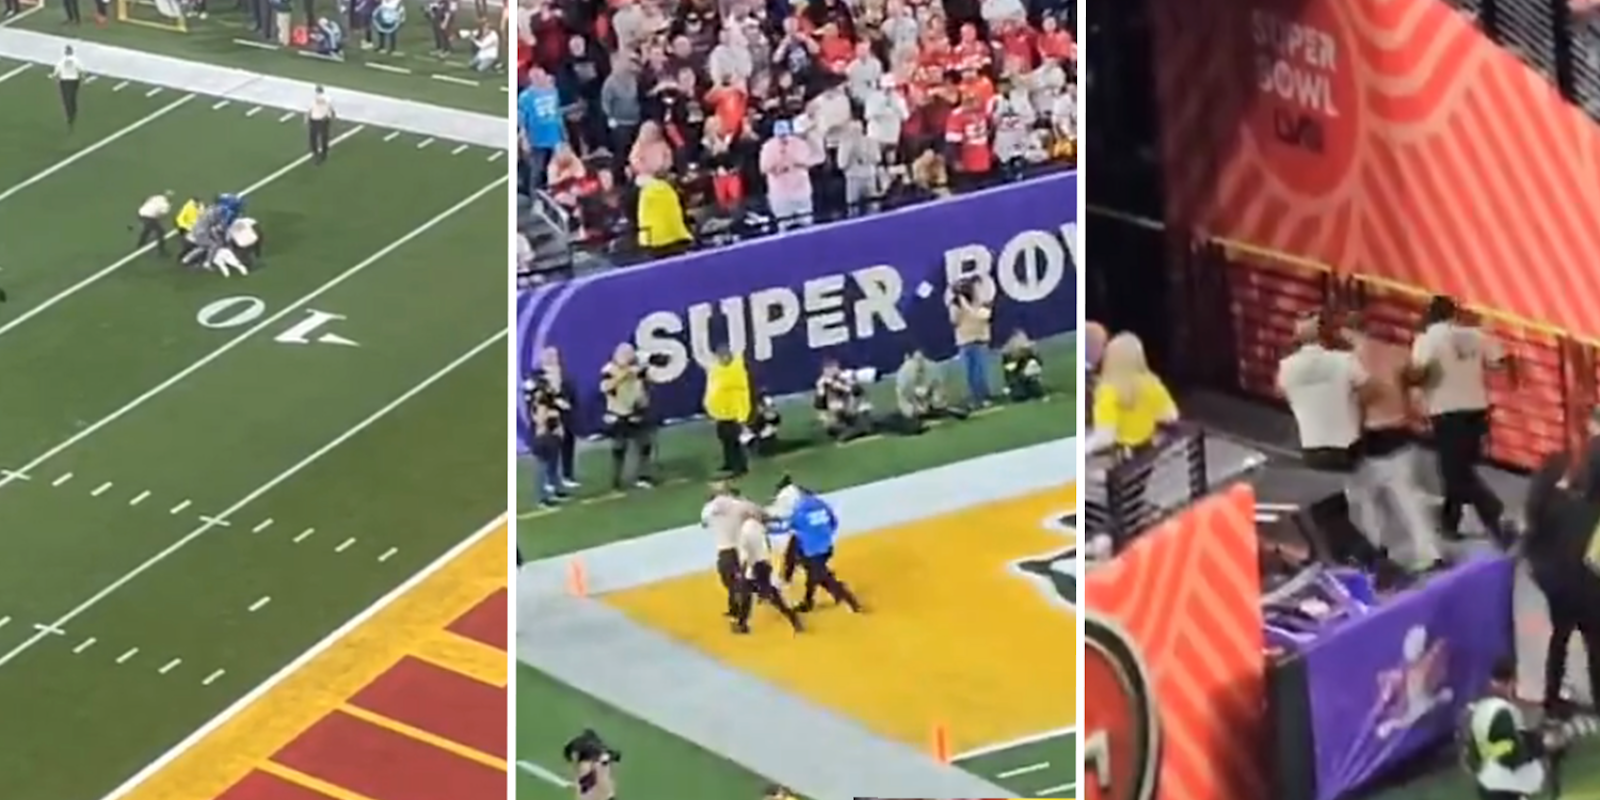 Super Bowl streaker interrupts the big game